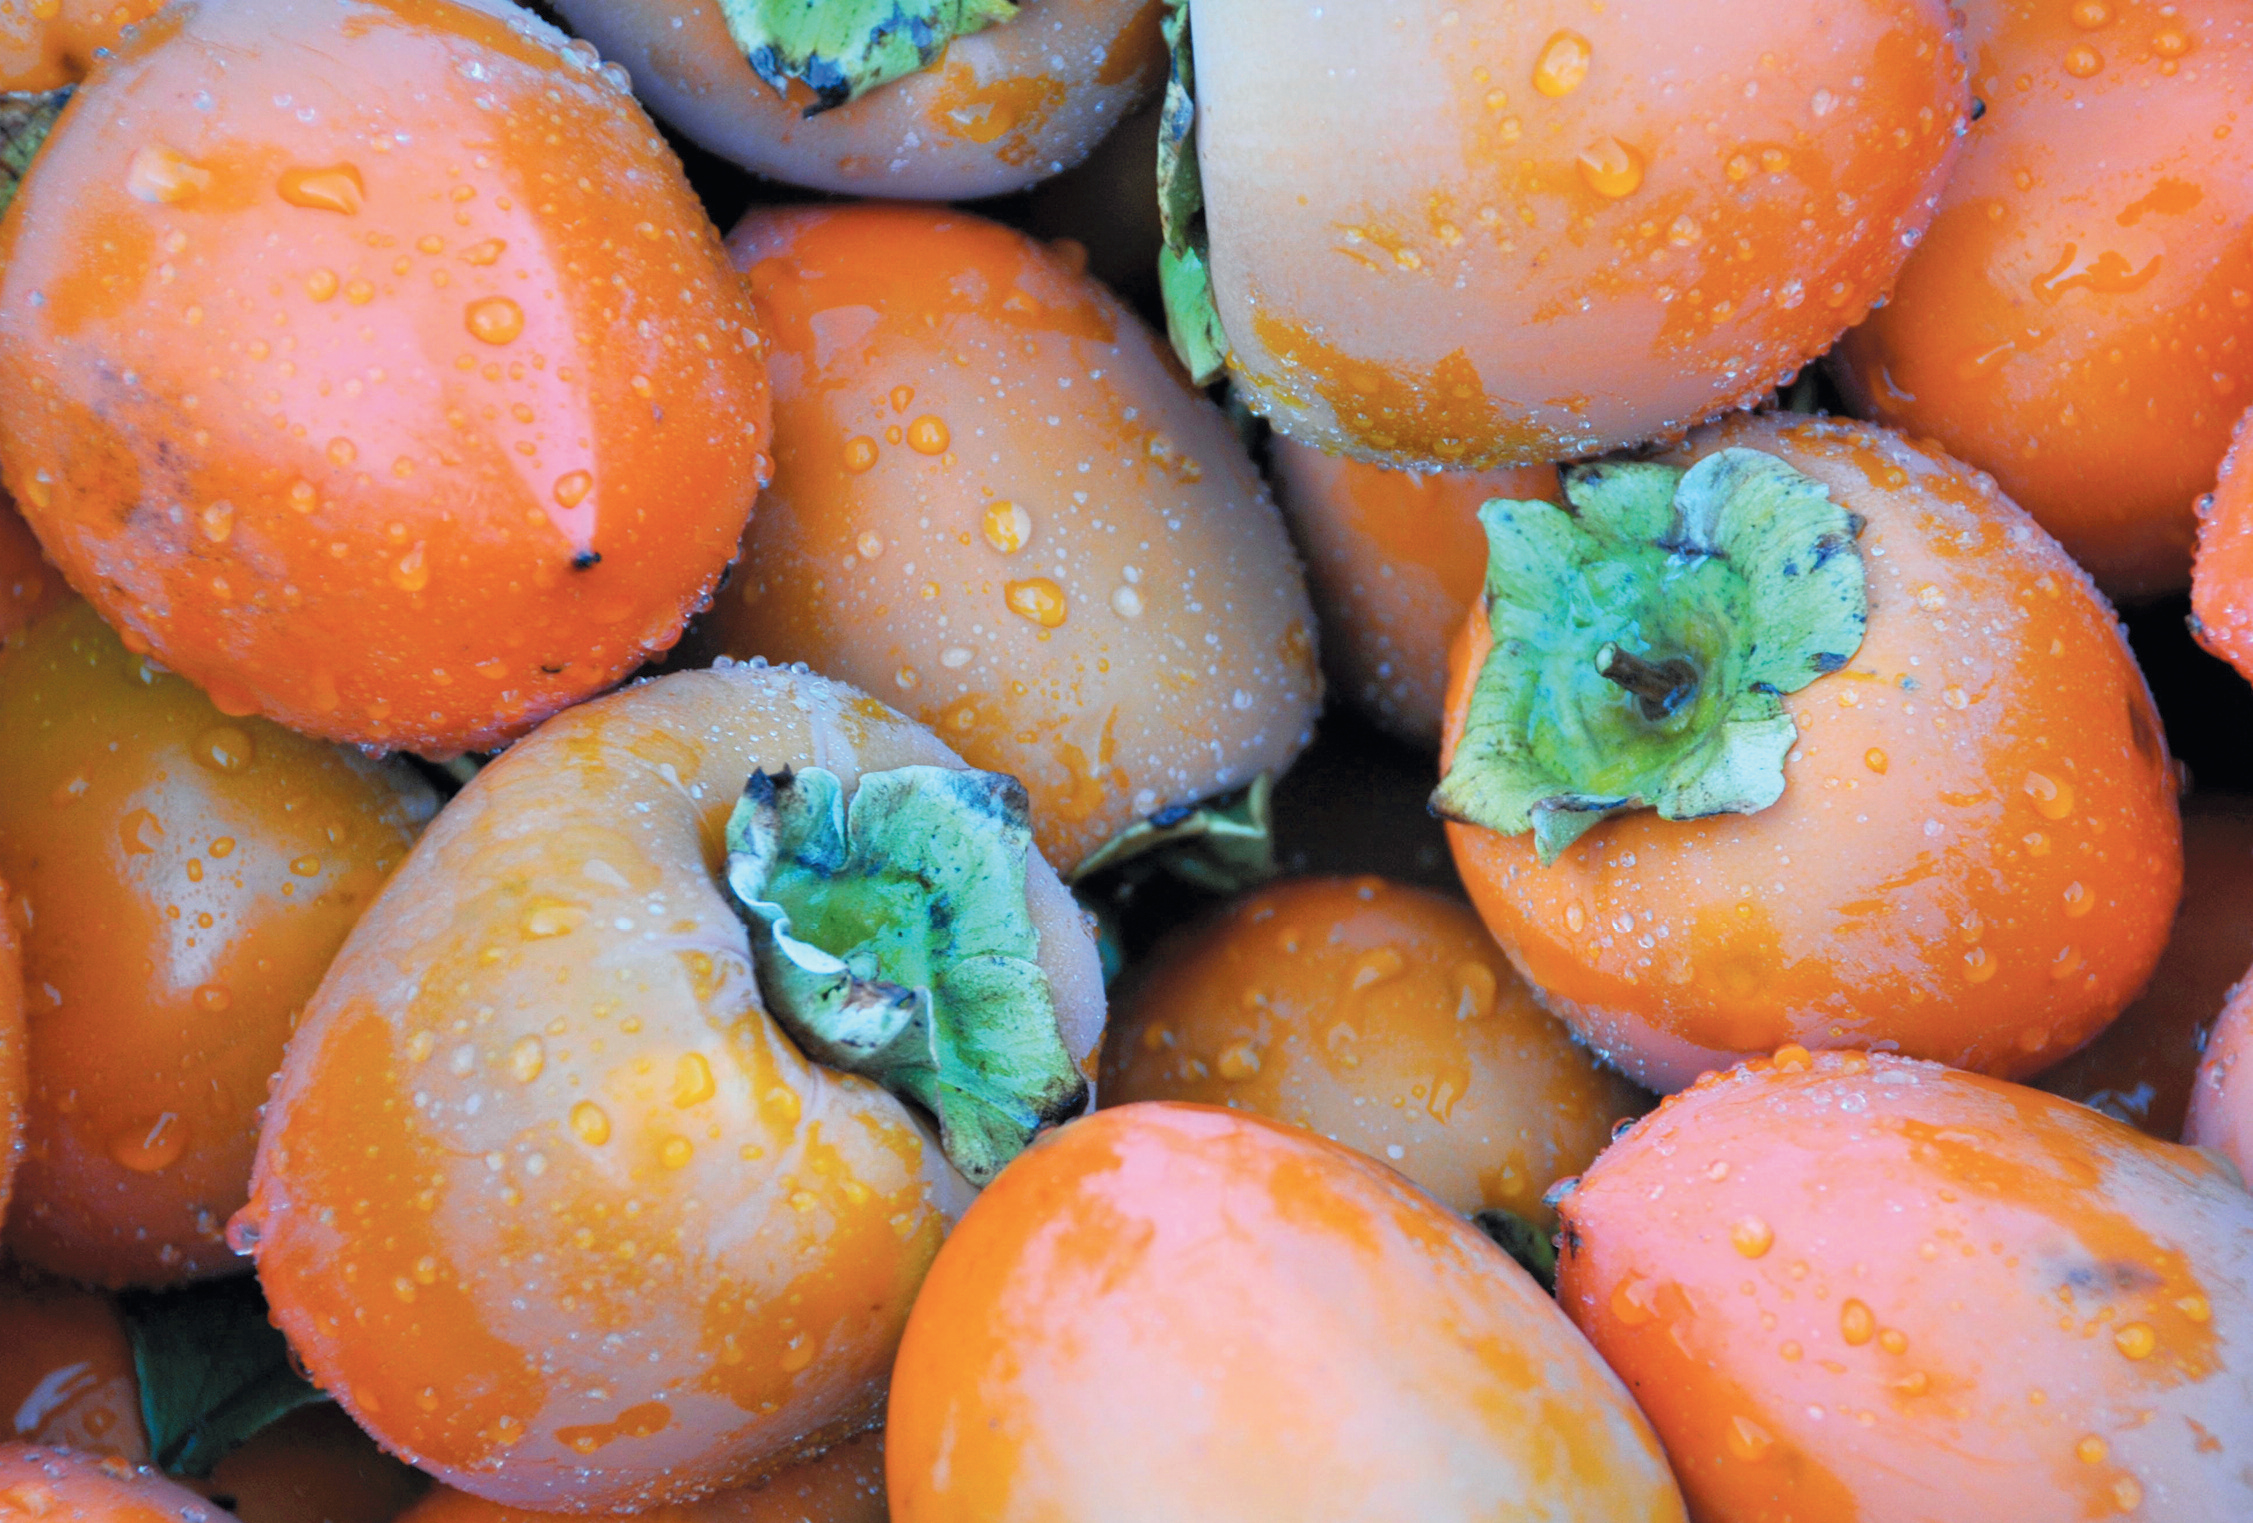 Persimmon Season: What Makes this Orange Fruit Special